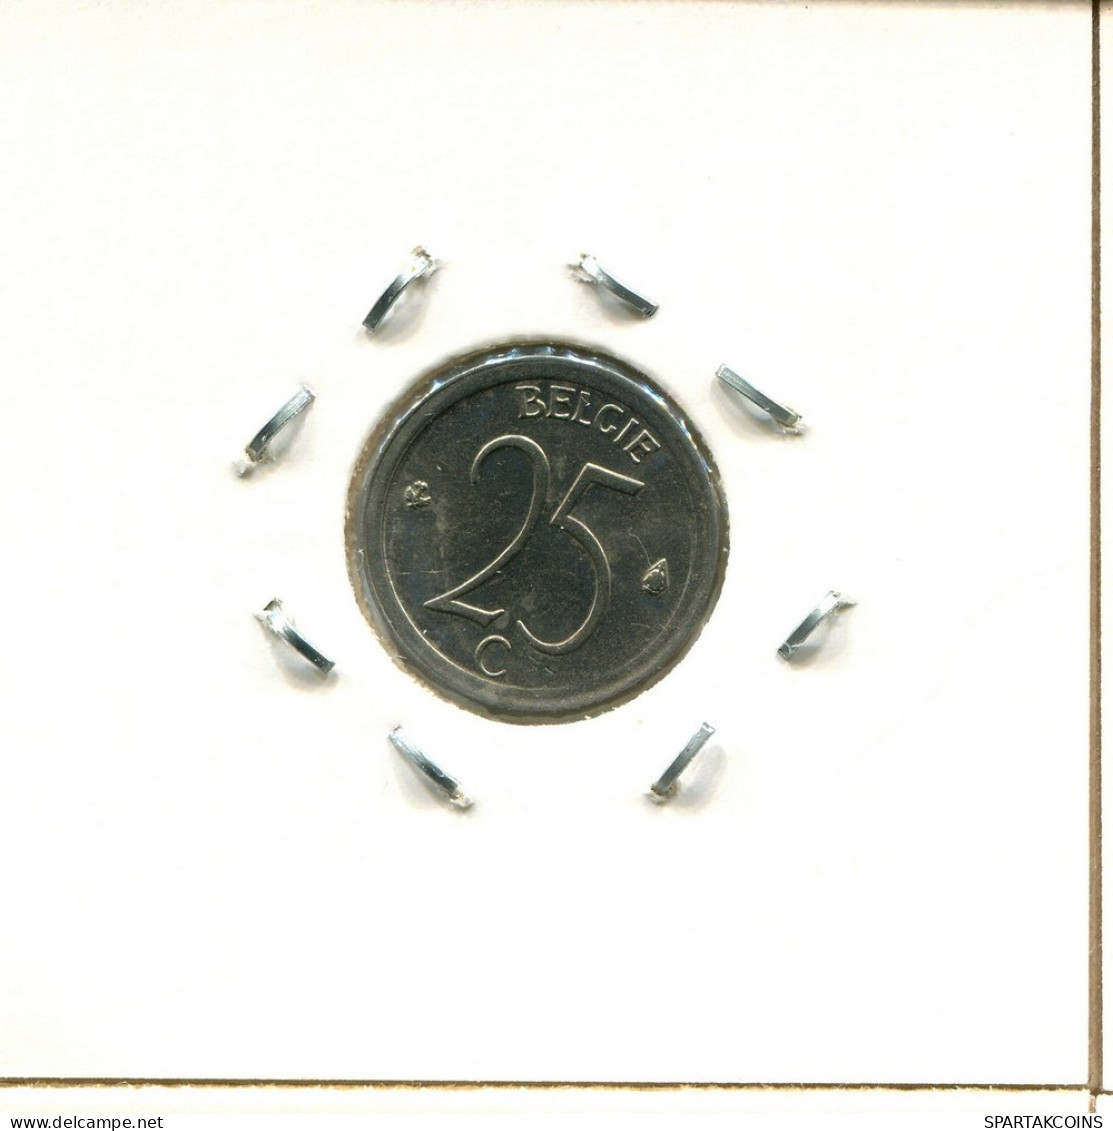 25 CENTIMES 1971 DUTCH Text BÉLGICA BELGIUM Moneda #BA335.E.A - 25 Cents